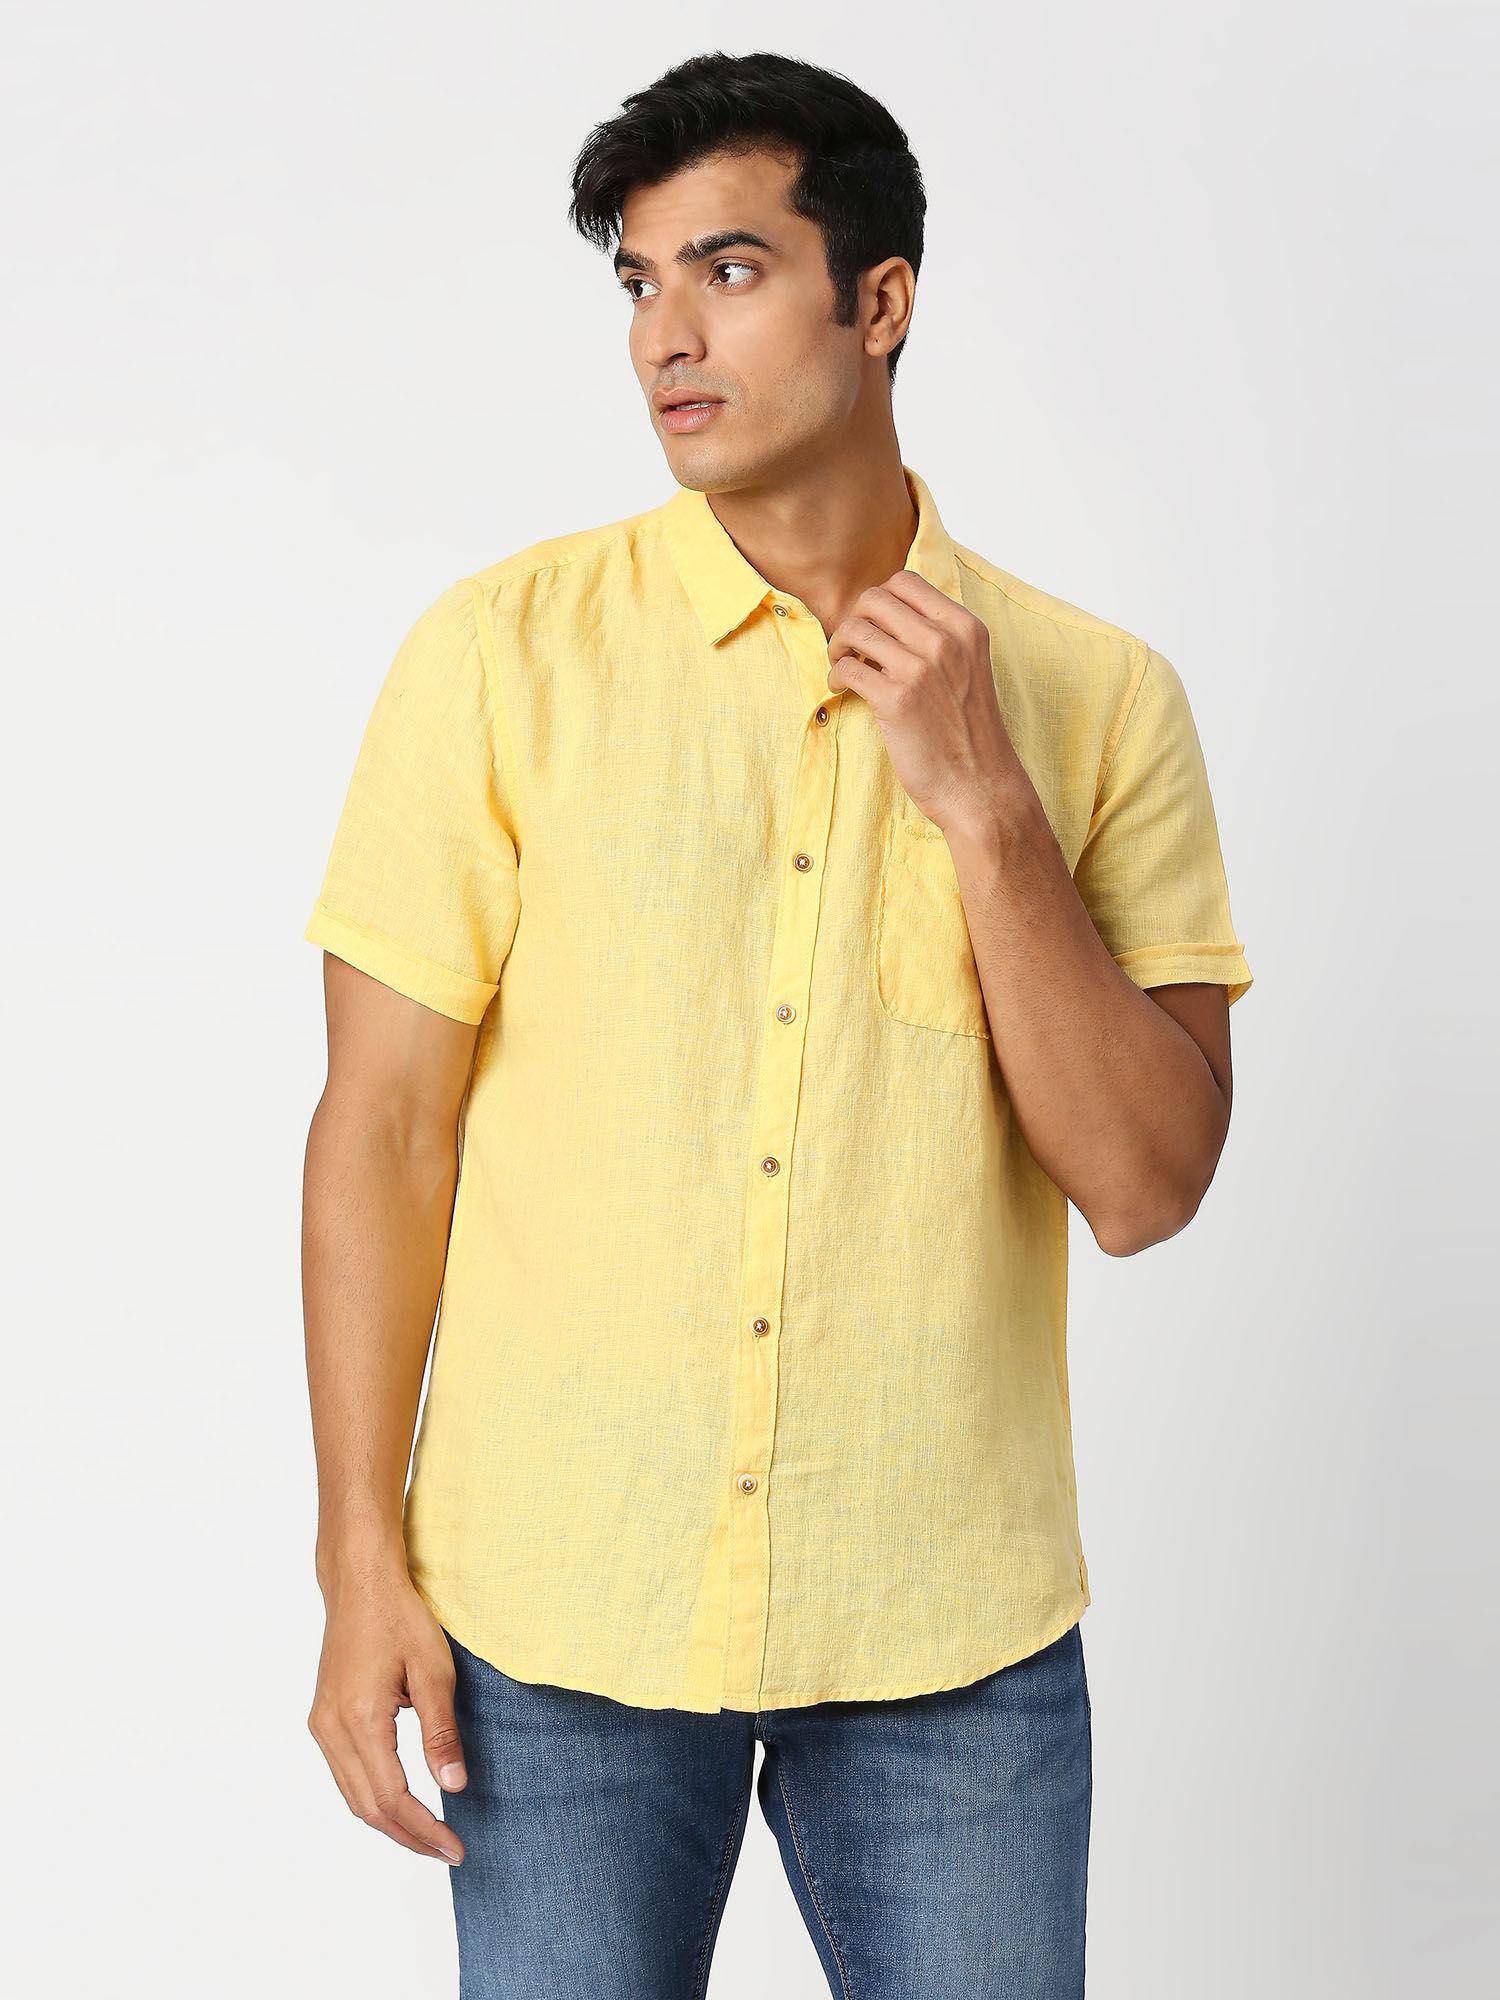 kingsman half sleeves yellow pure linen casual shirt